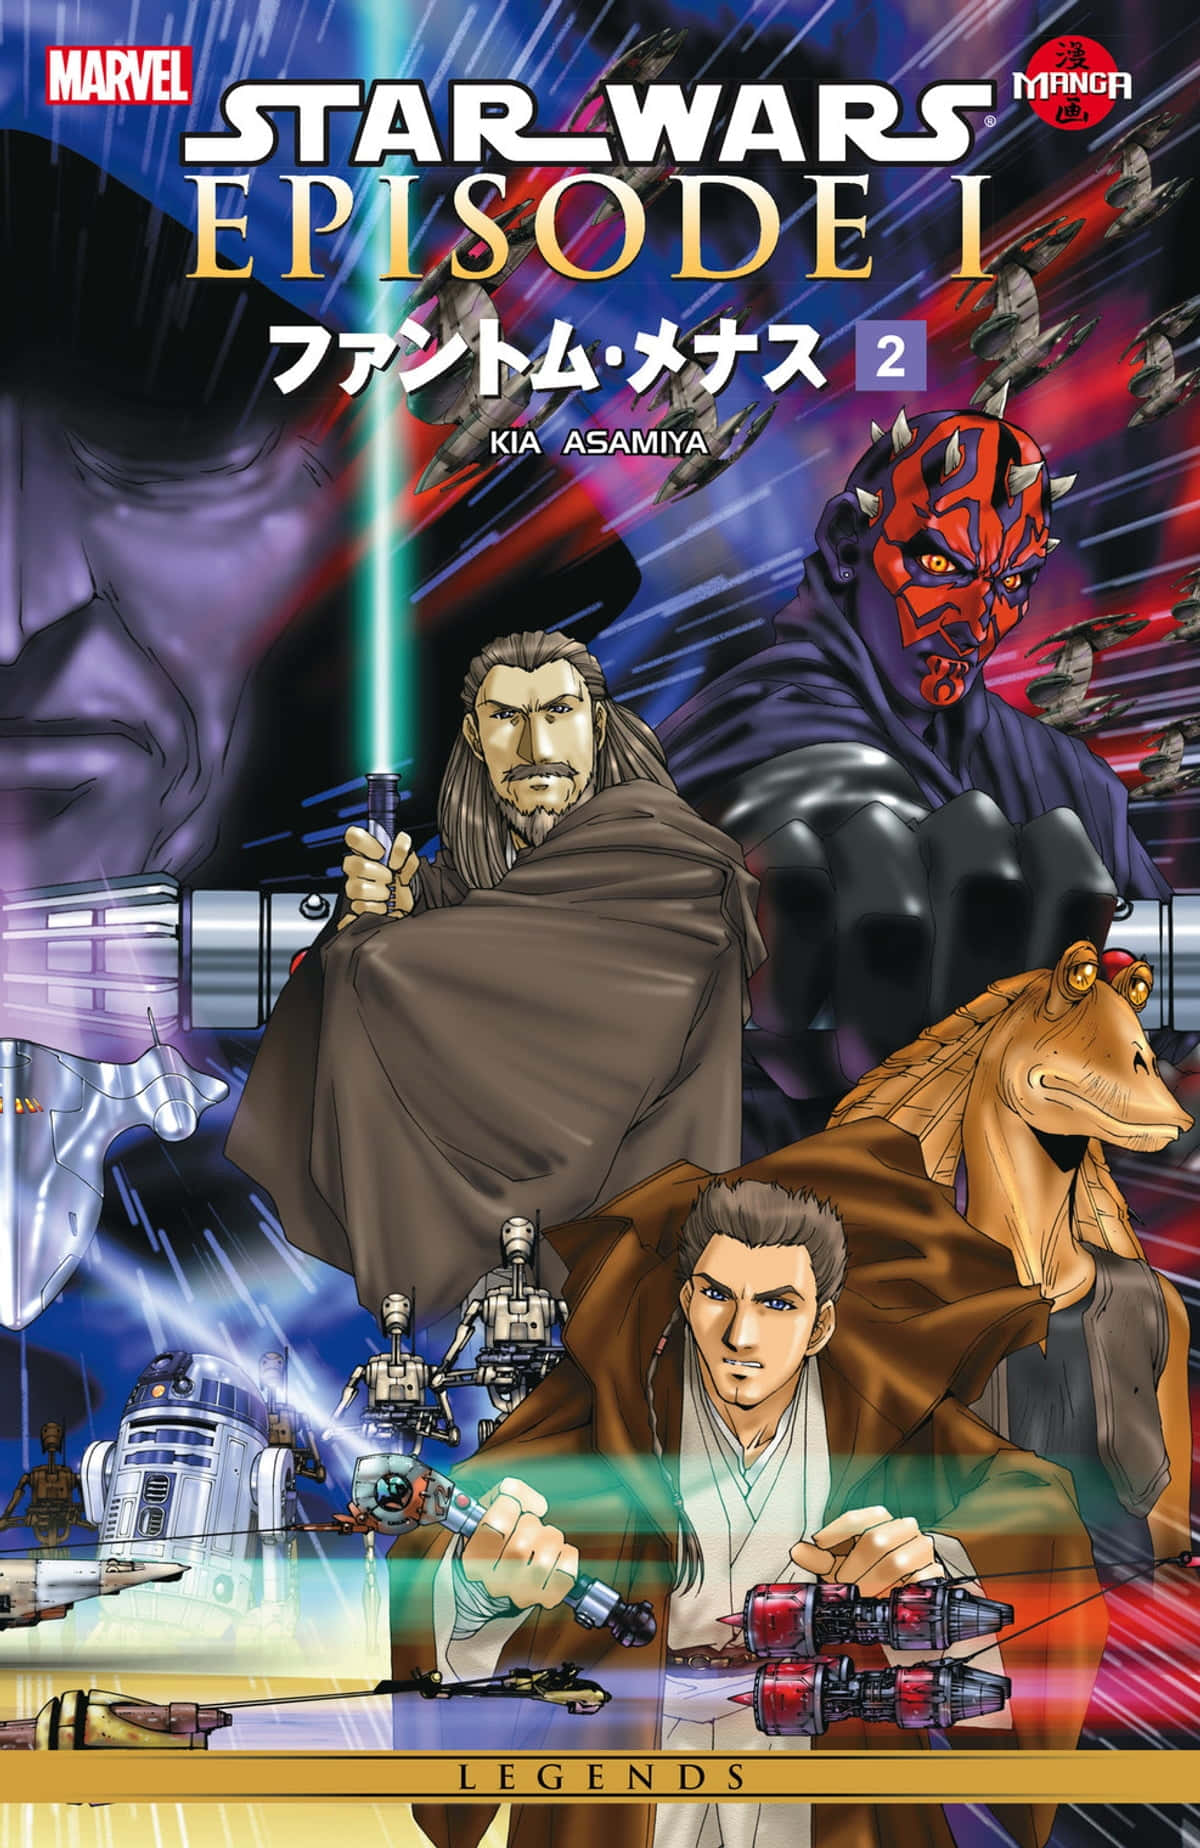 Qui-Gon Jinn and Obi-Wan Kenobi face off against Darth Maul in The Phantom Menace Wallpaper